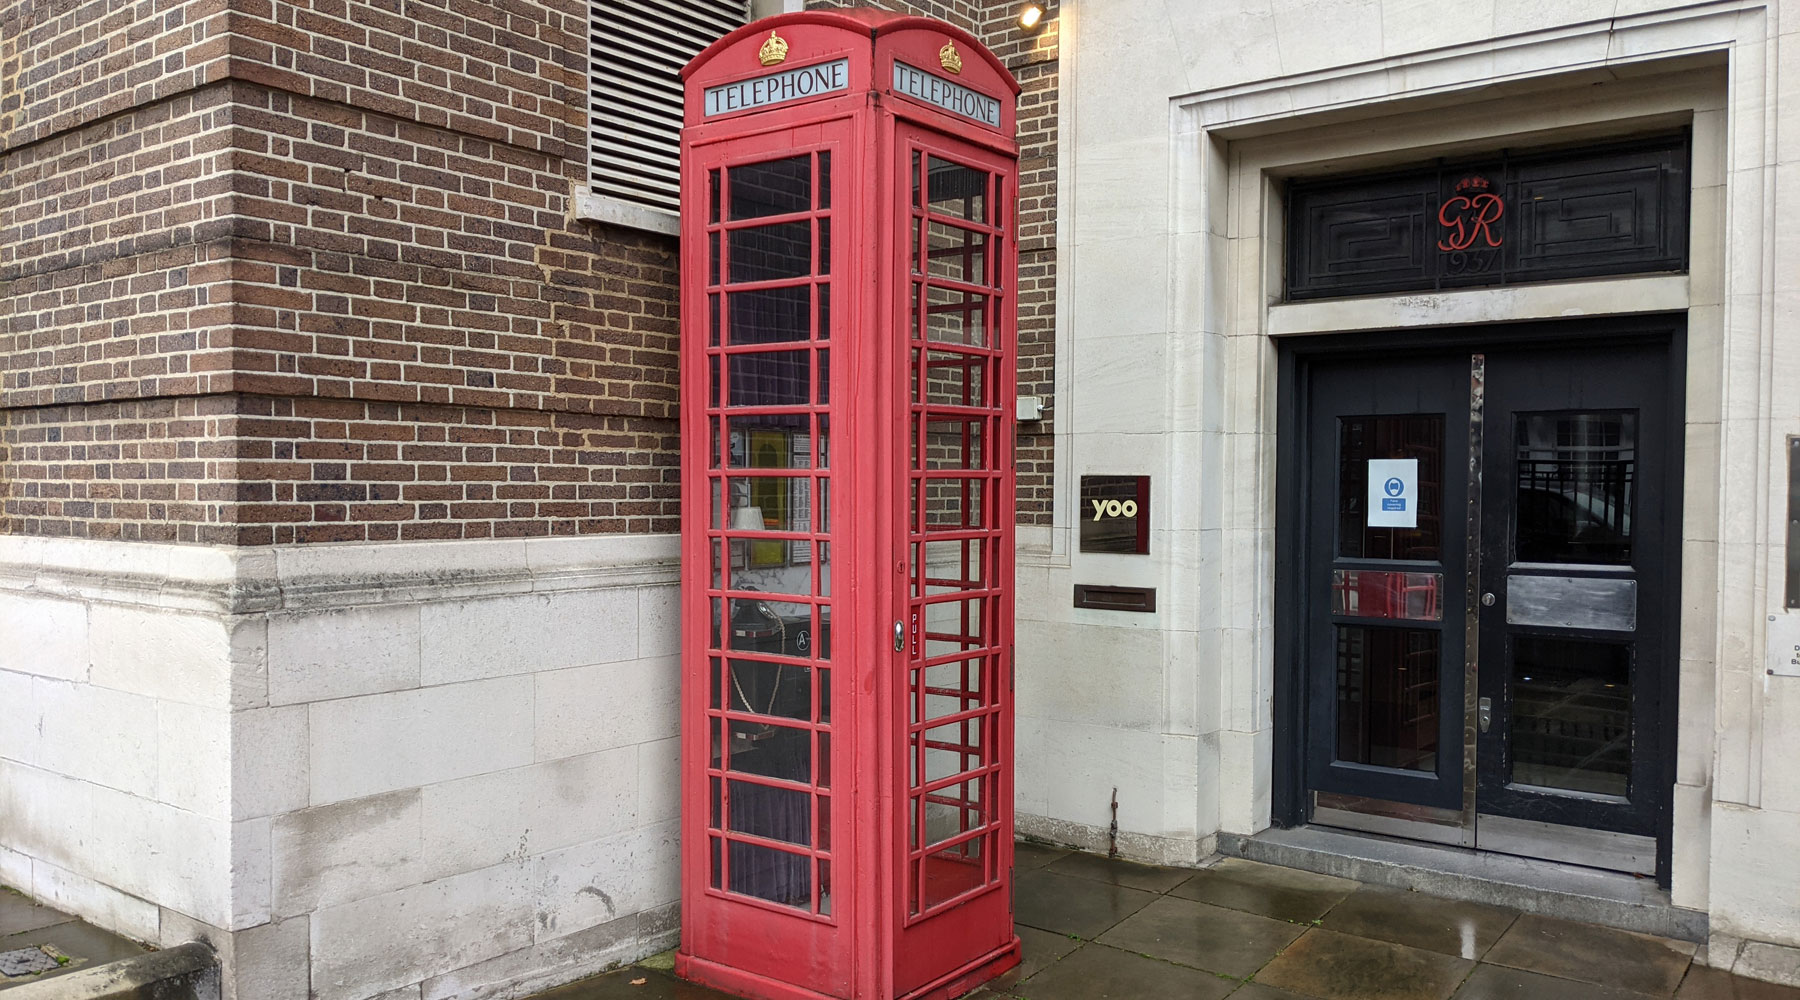 Maida Vale's double-decker telephone box